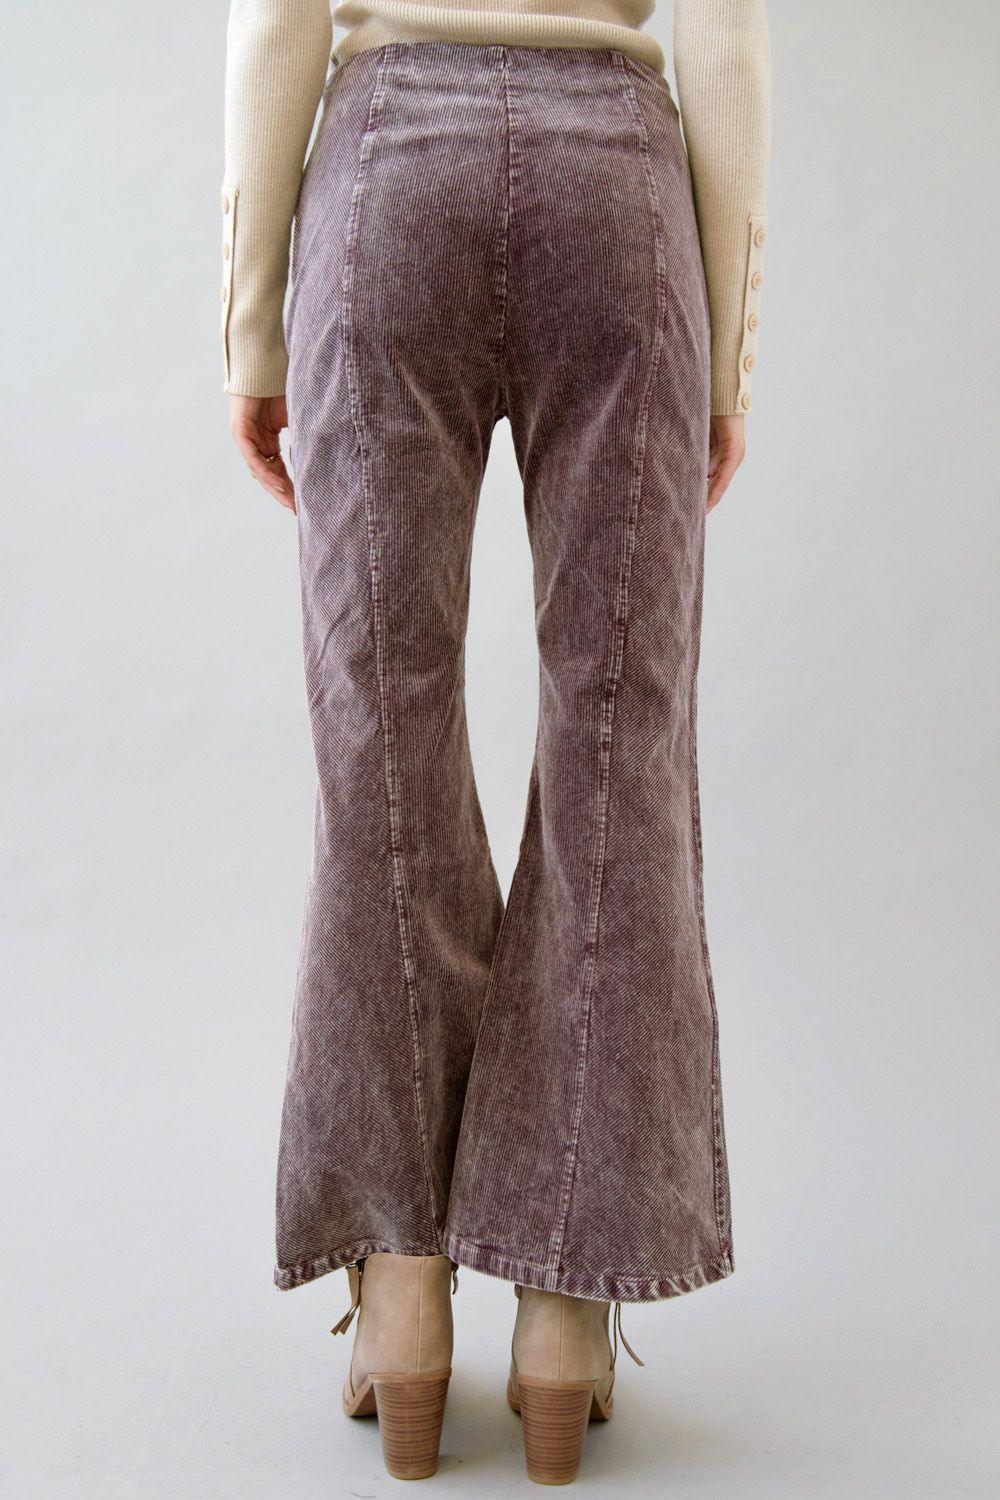 Dusty Lavender Corduroy Flare Pants - Strawberry Moon Boutique